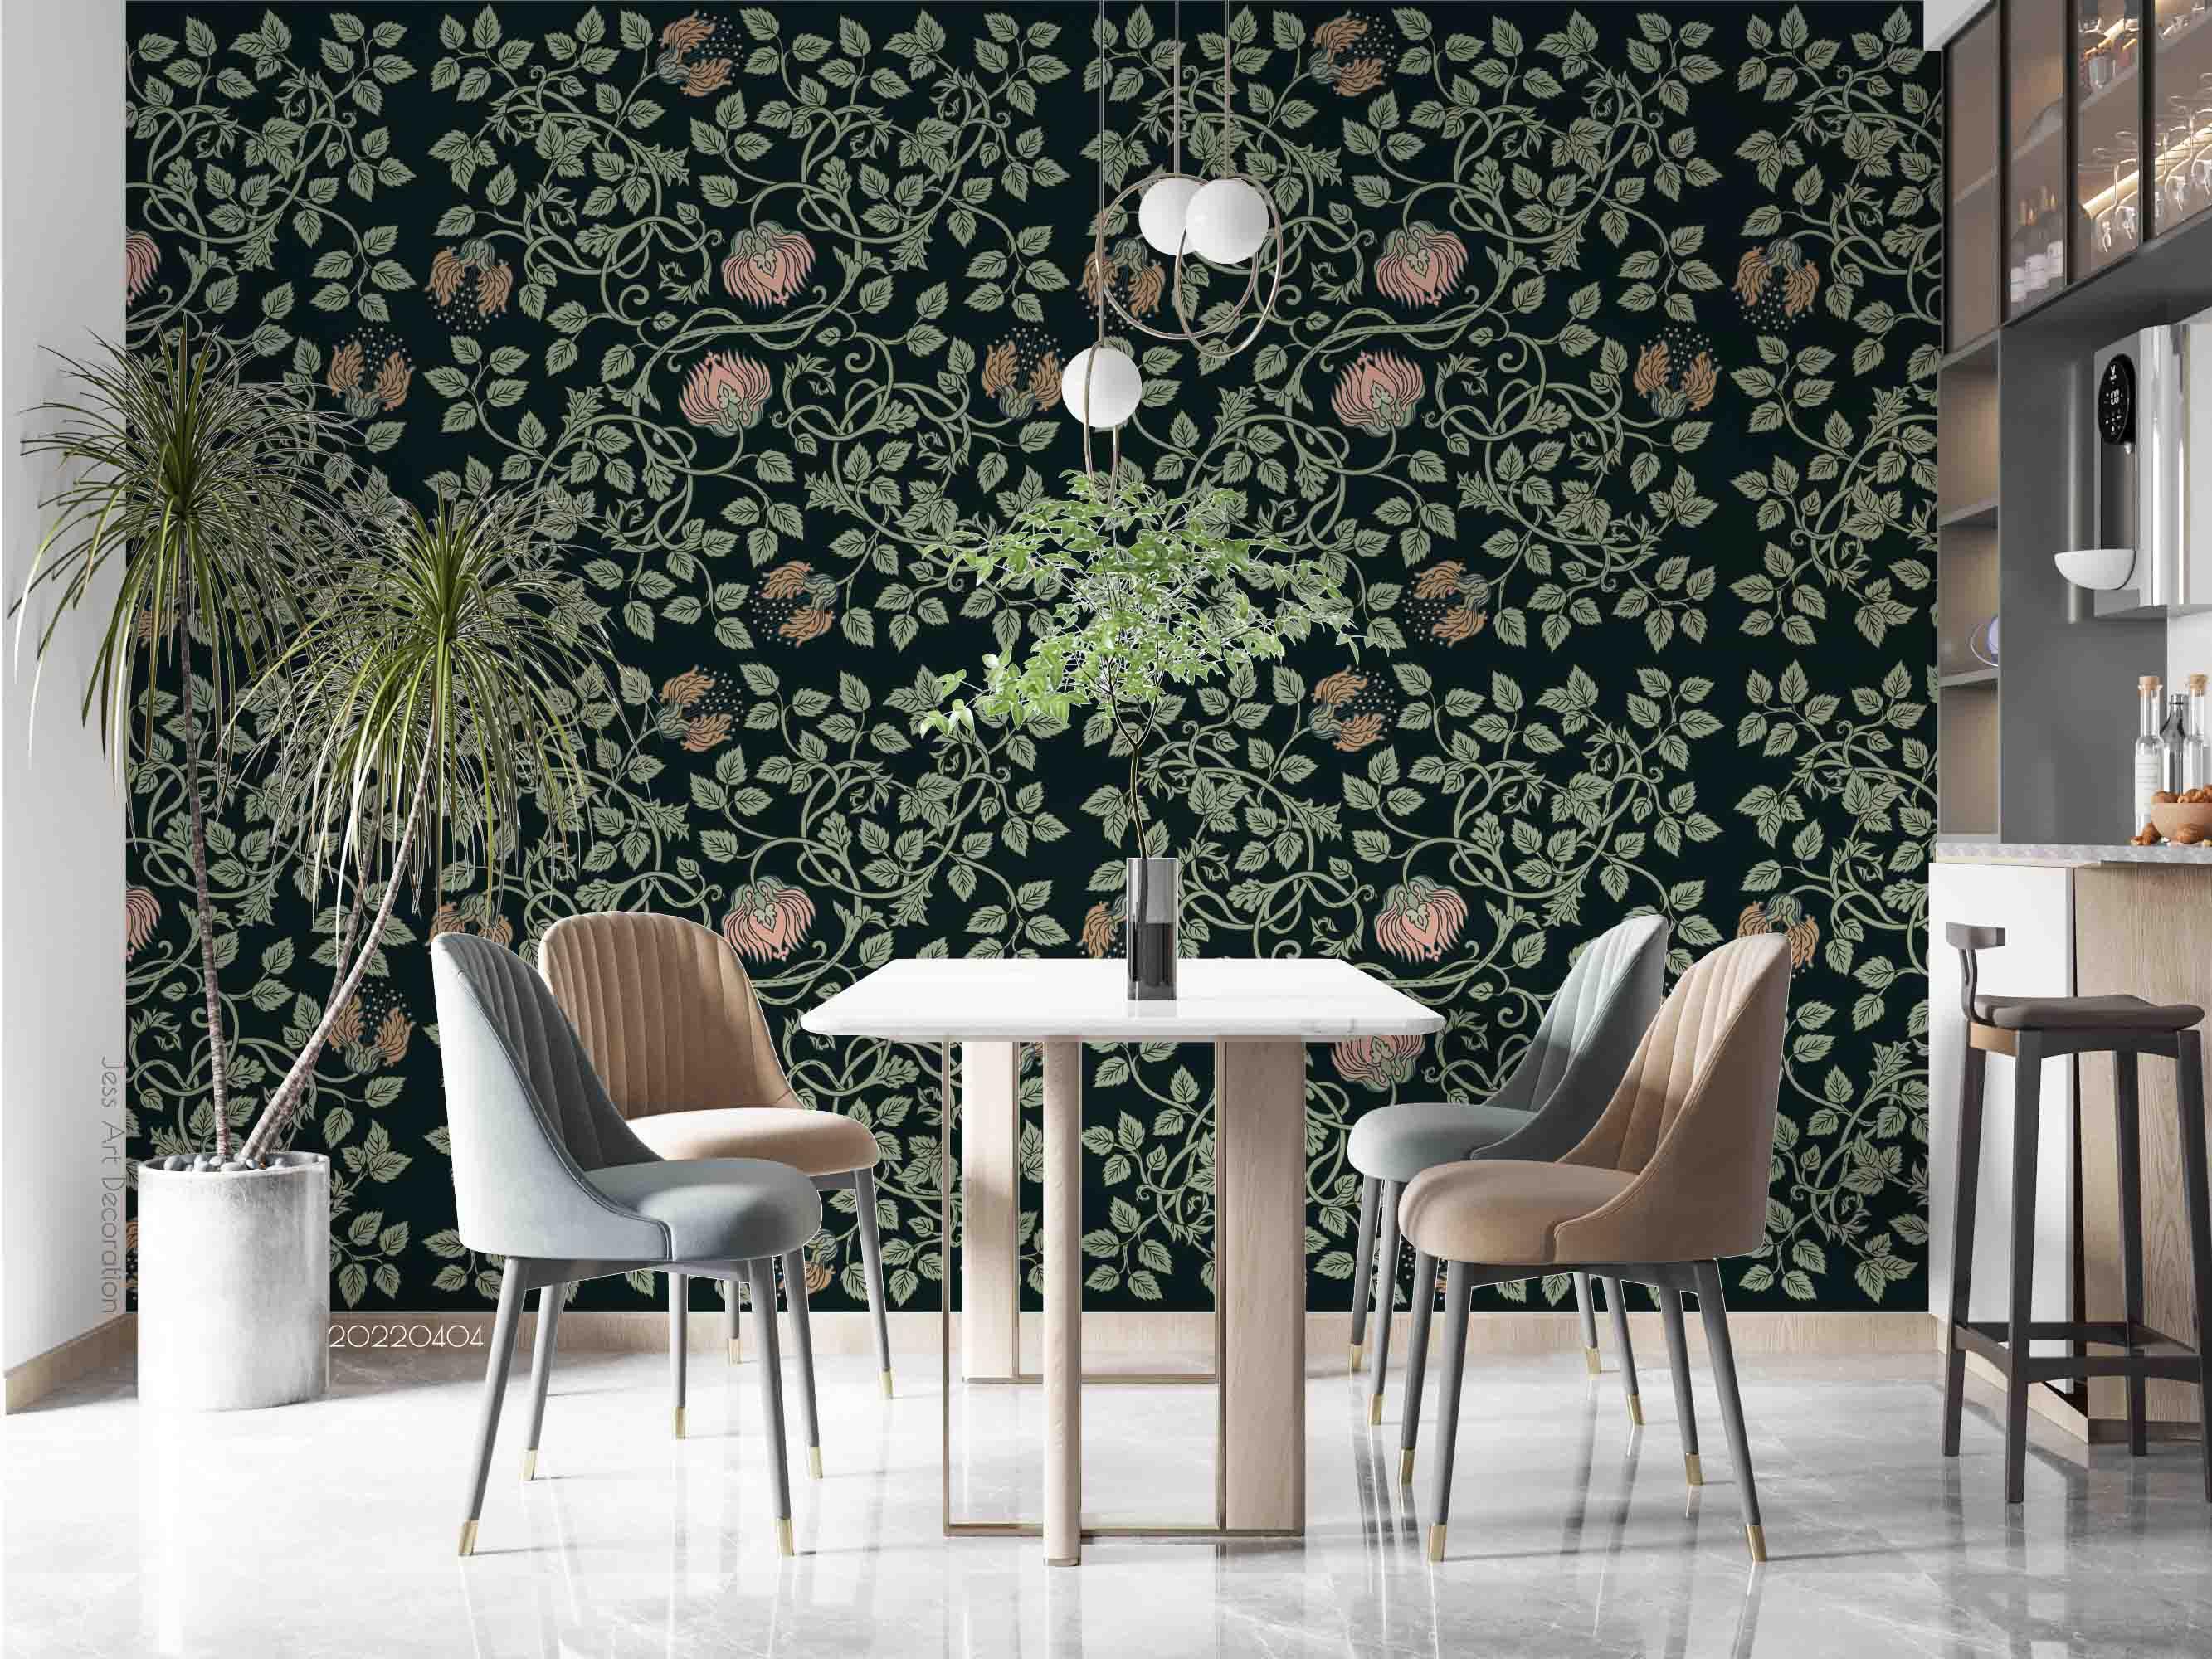 3D Vintage Plant Leaf Floral Wall Mural Wallpaper GD 3977- Jess Art Decoration